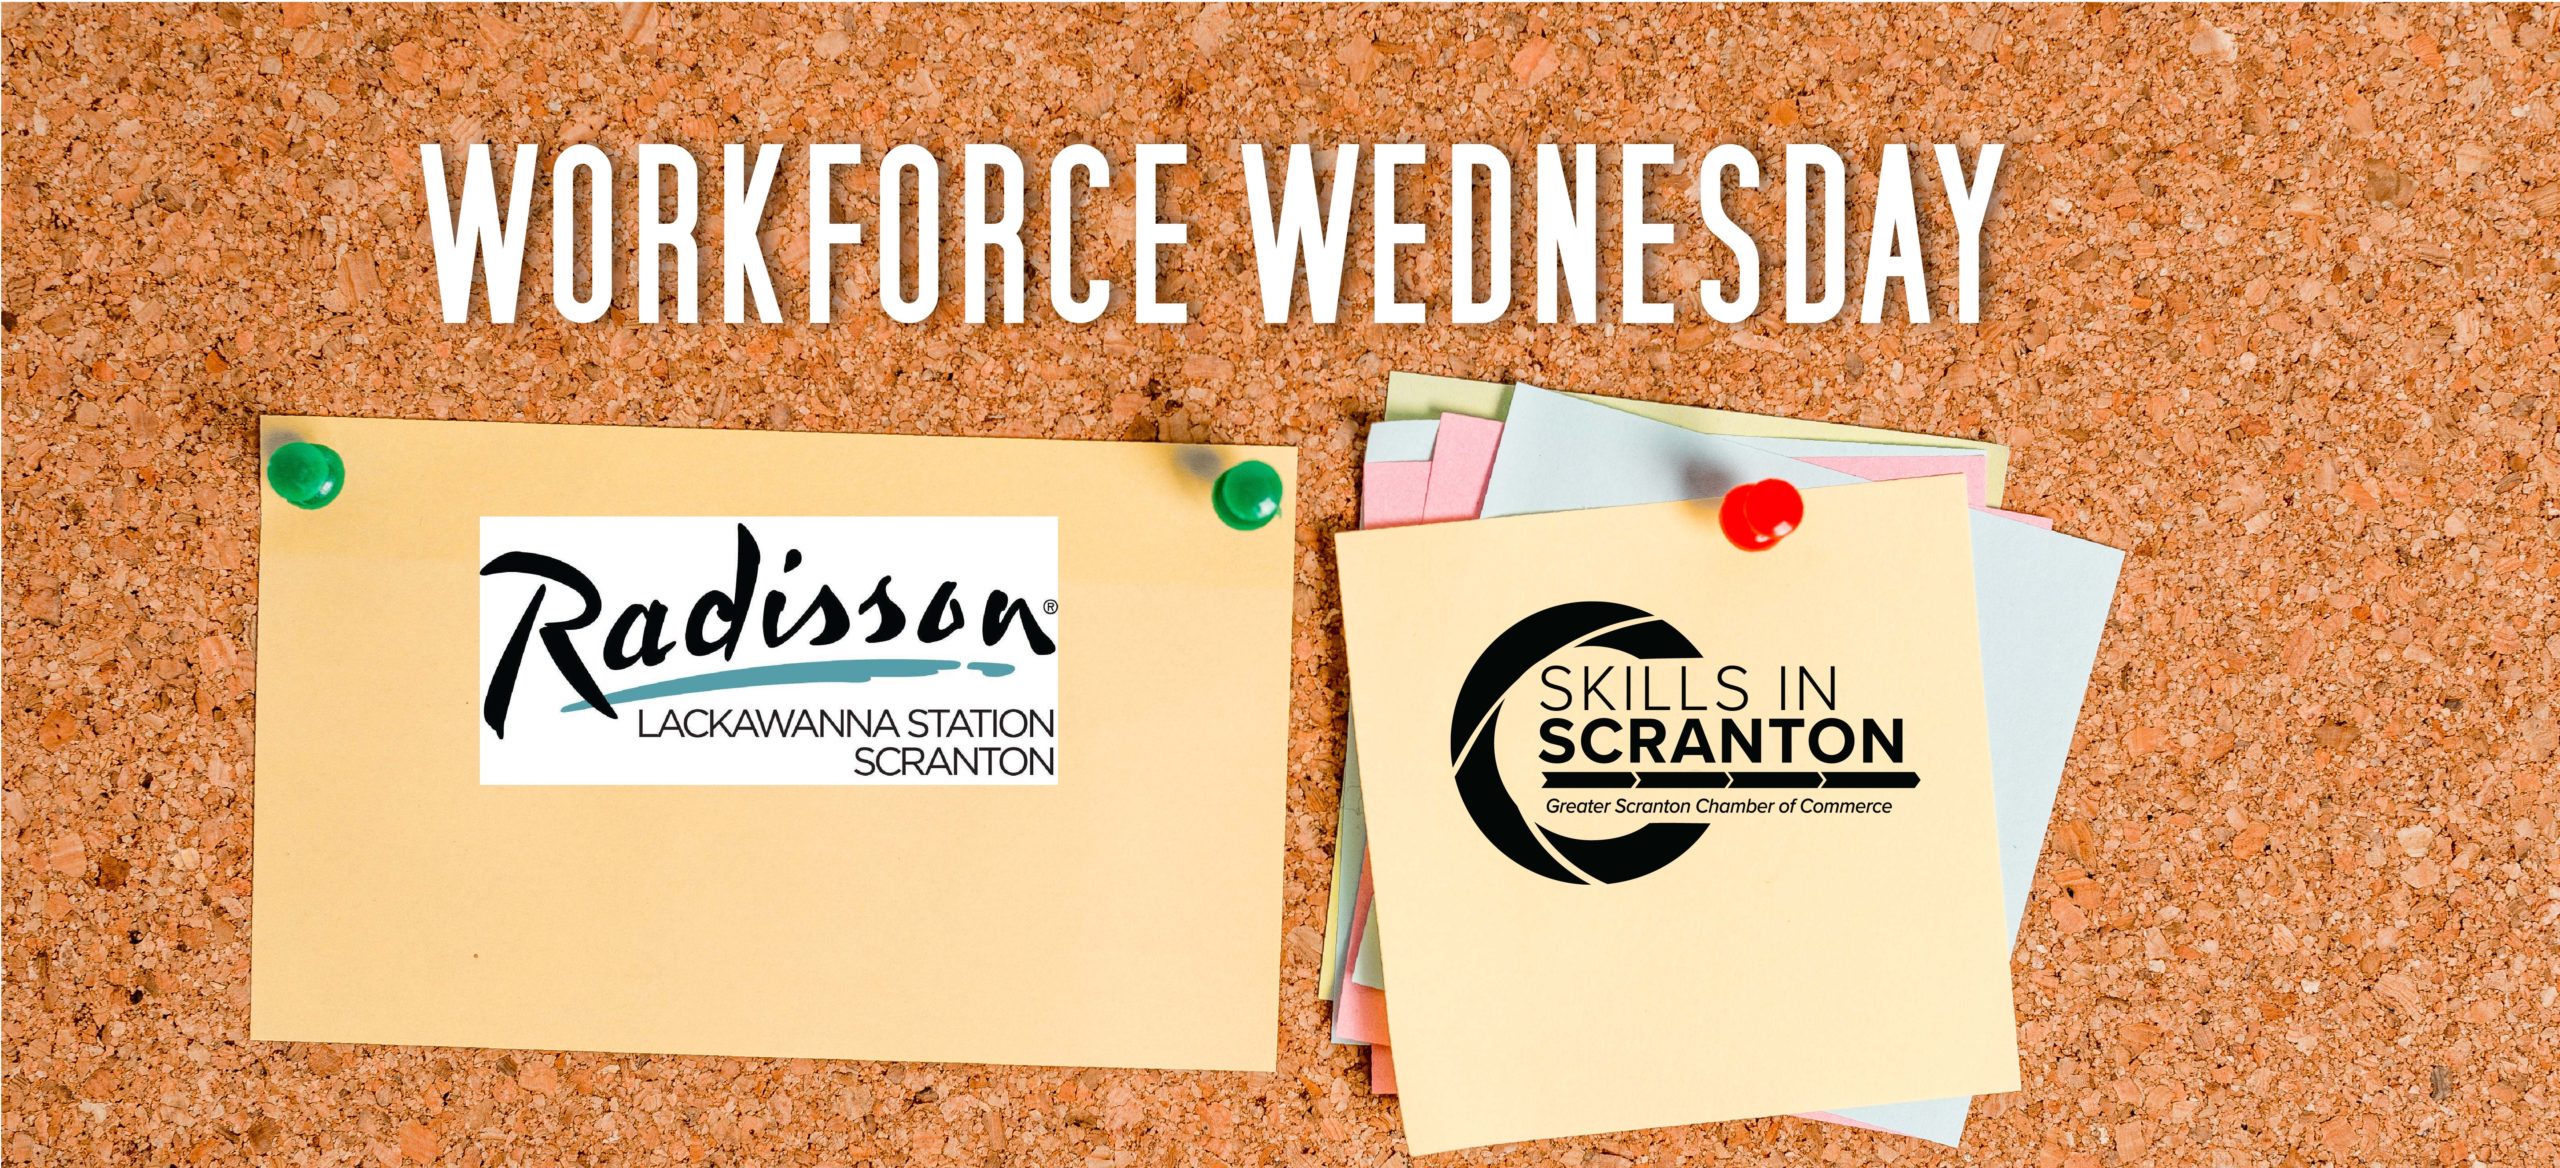 Workforce Wednesday: Radisson Lackawanna Station Hotel